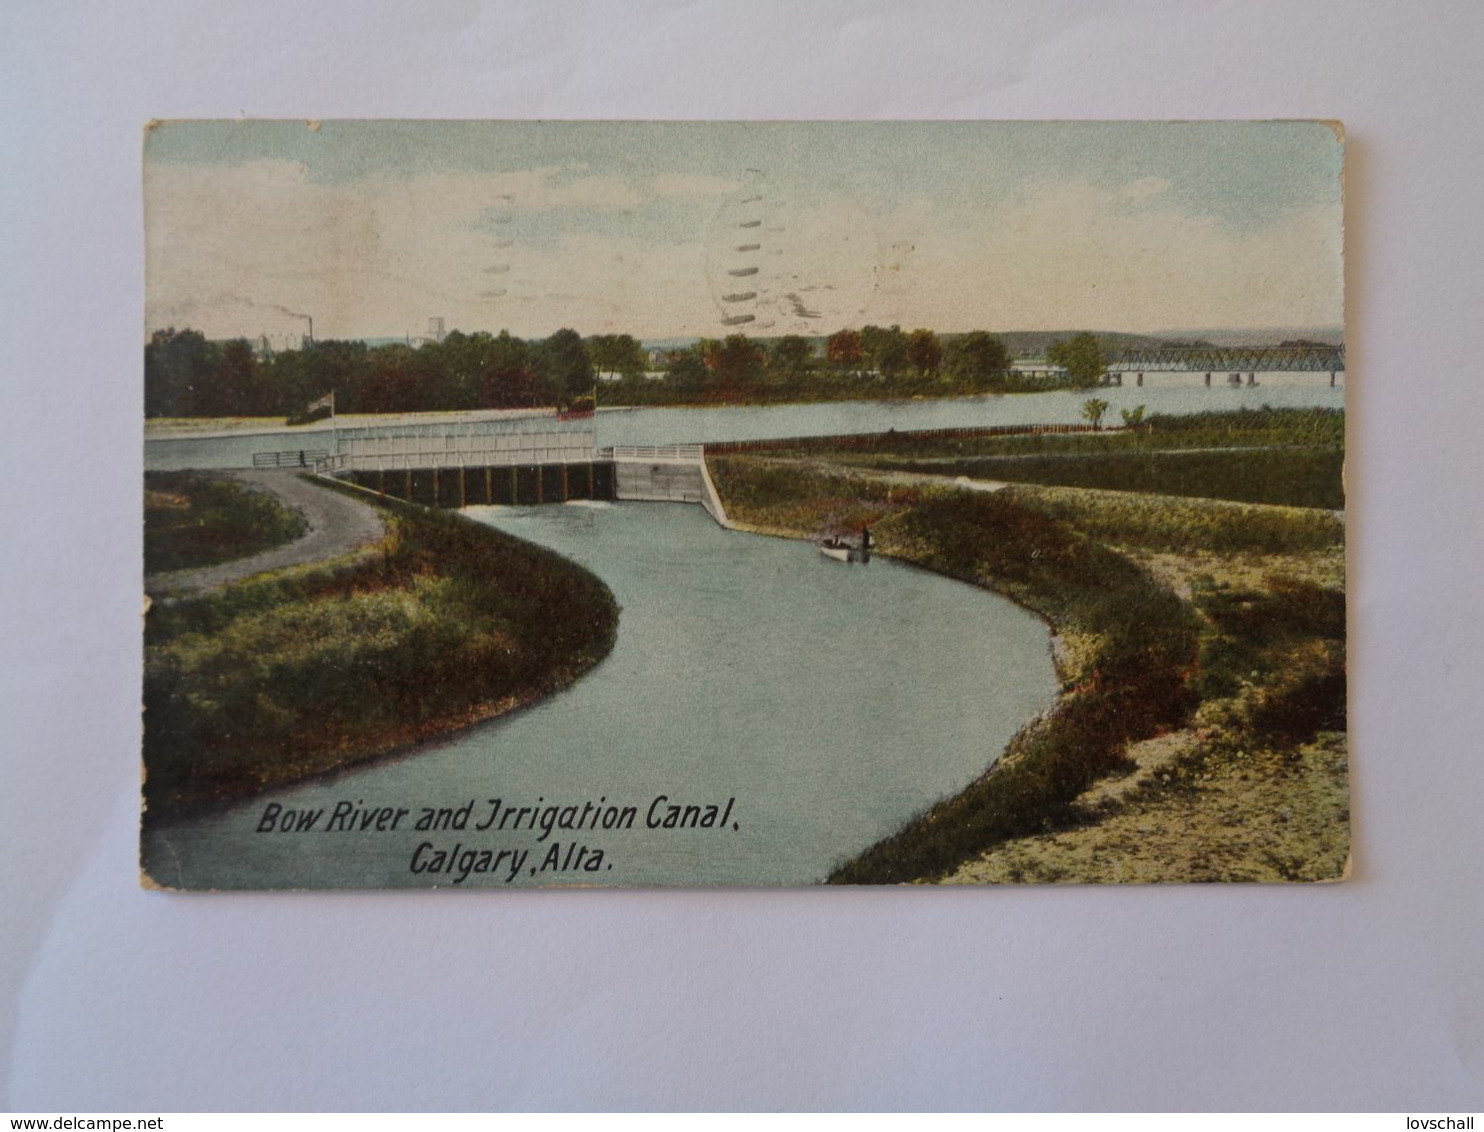 Calgary. - Bow River And Jrrigation Canal. (8 - 1 - 1908) - Calgary